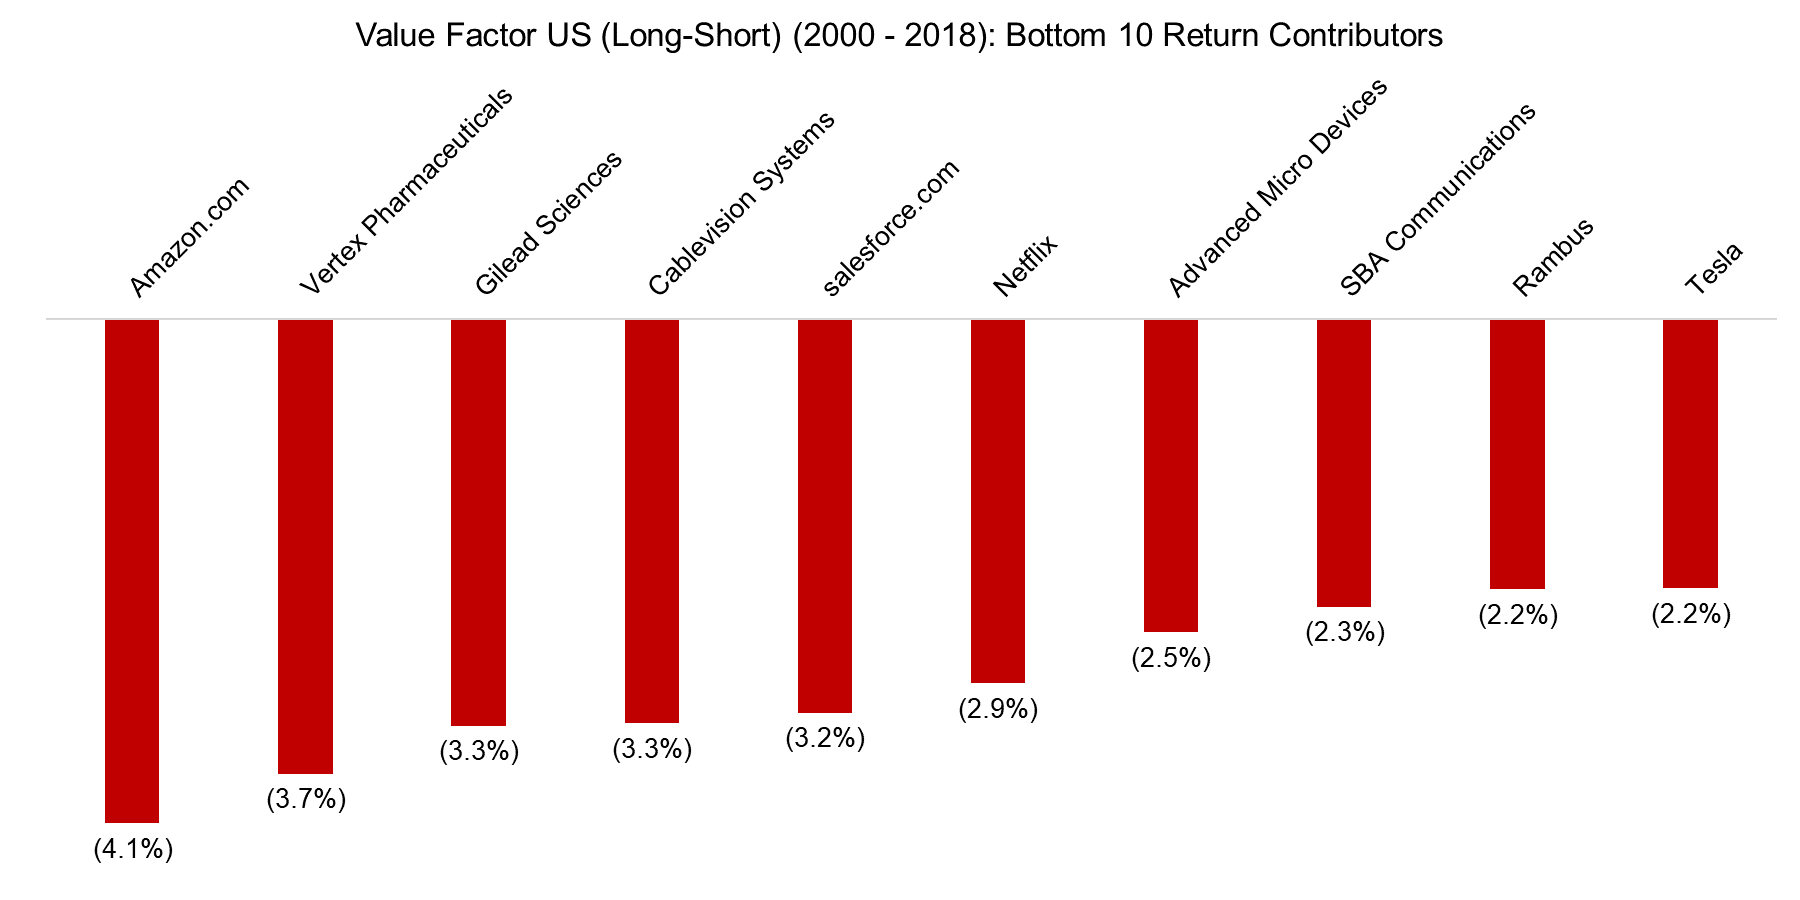 Value Factor US (LS) (2000 - 2018) Bottom 10 Return Contributor